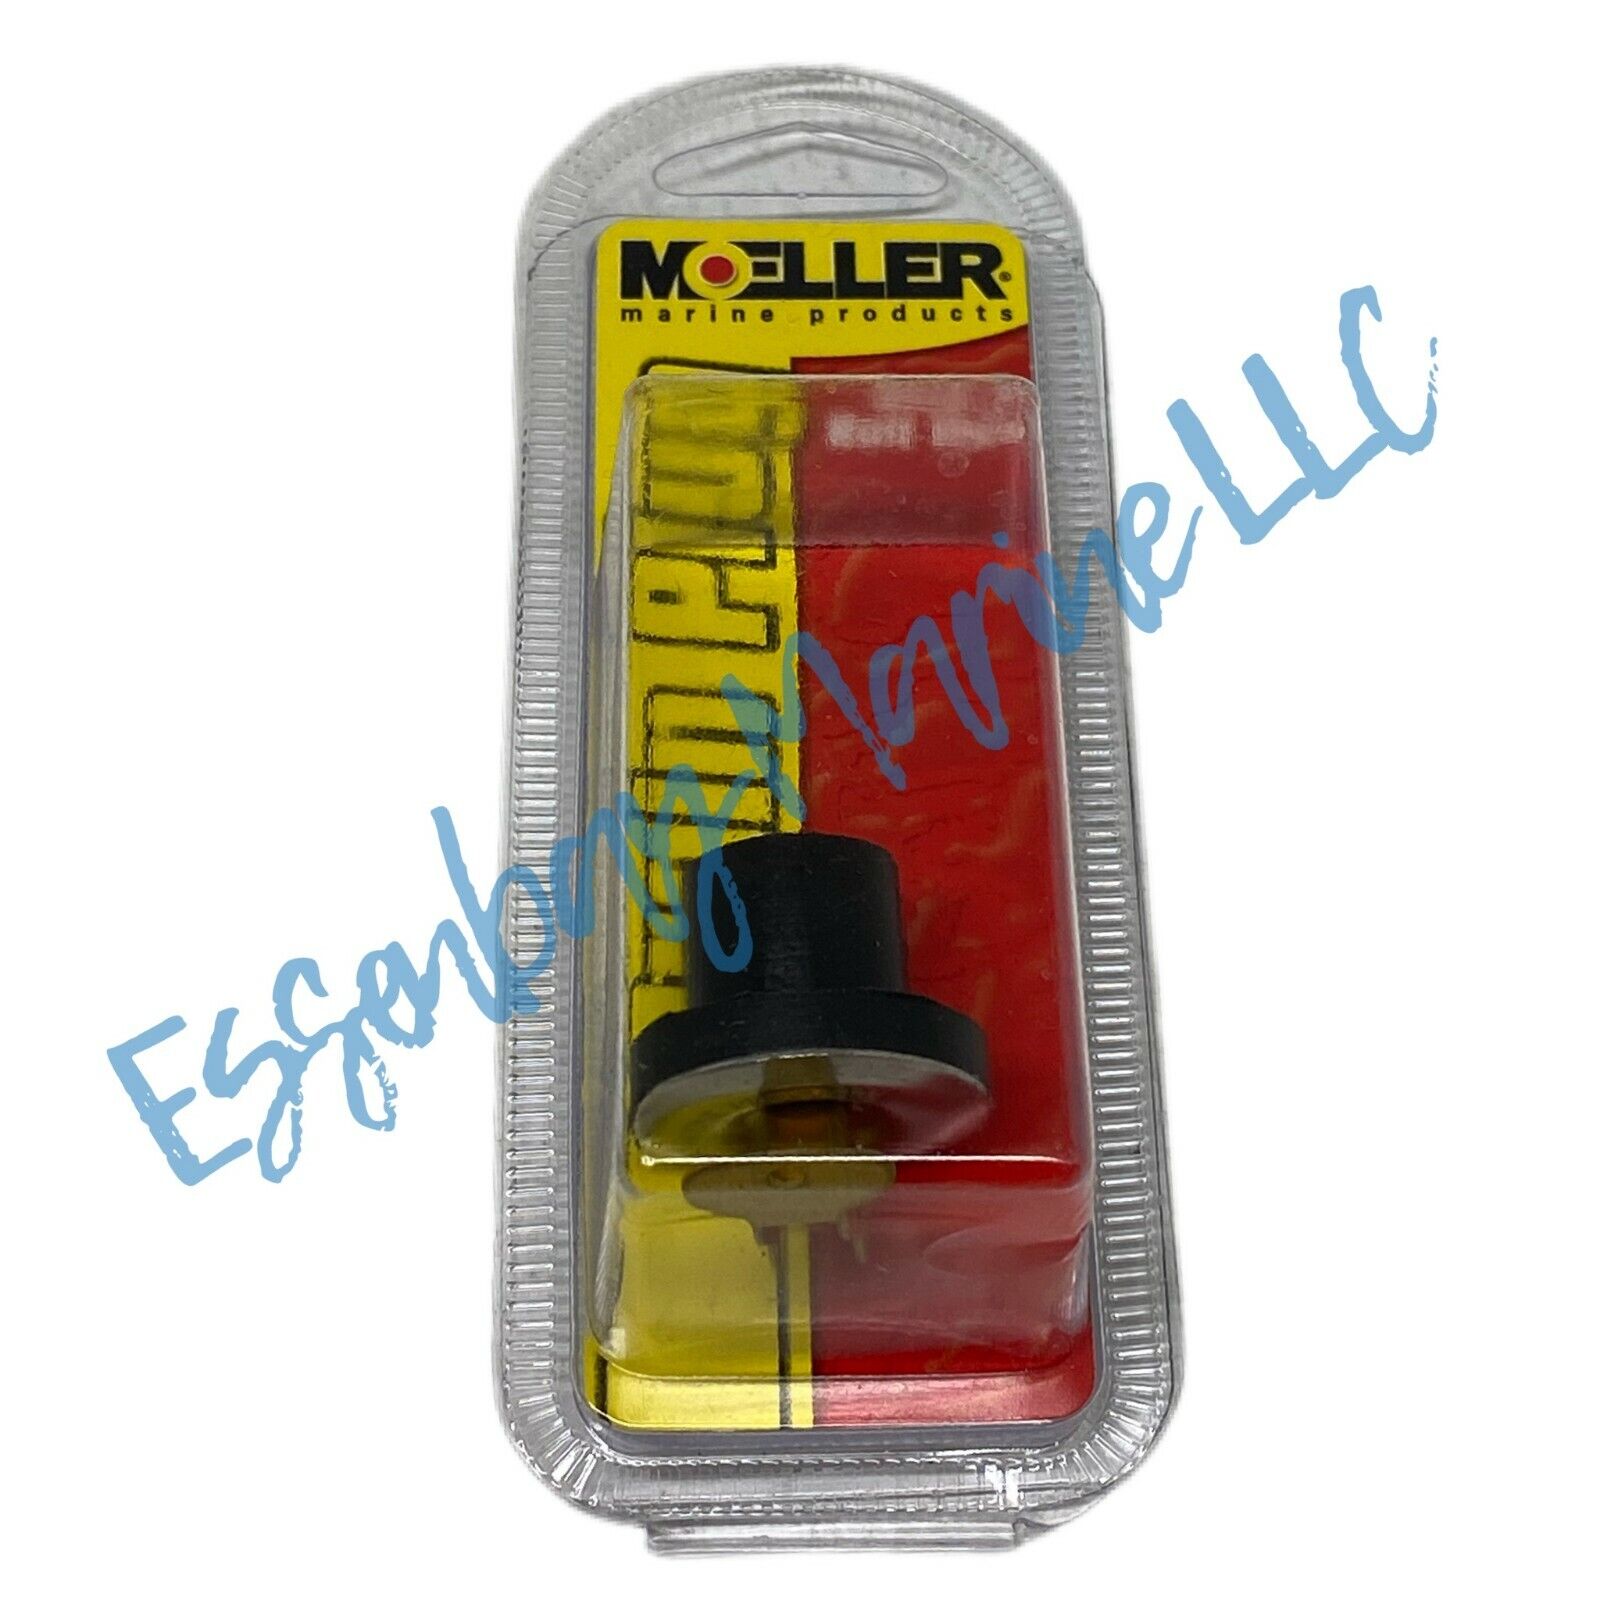 Moeller Marine Products 051006-10 Deck & Baitwell Plug 11/16